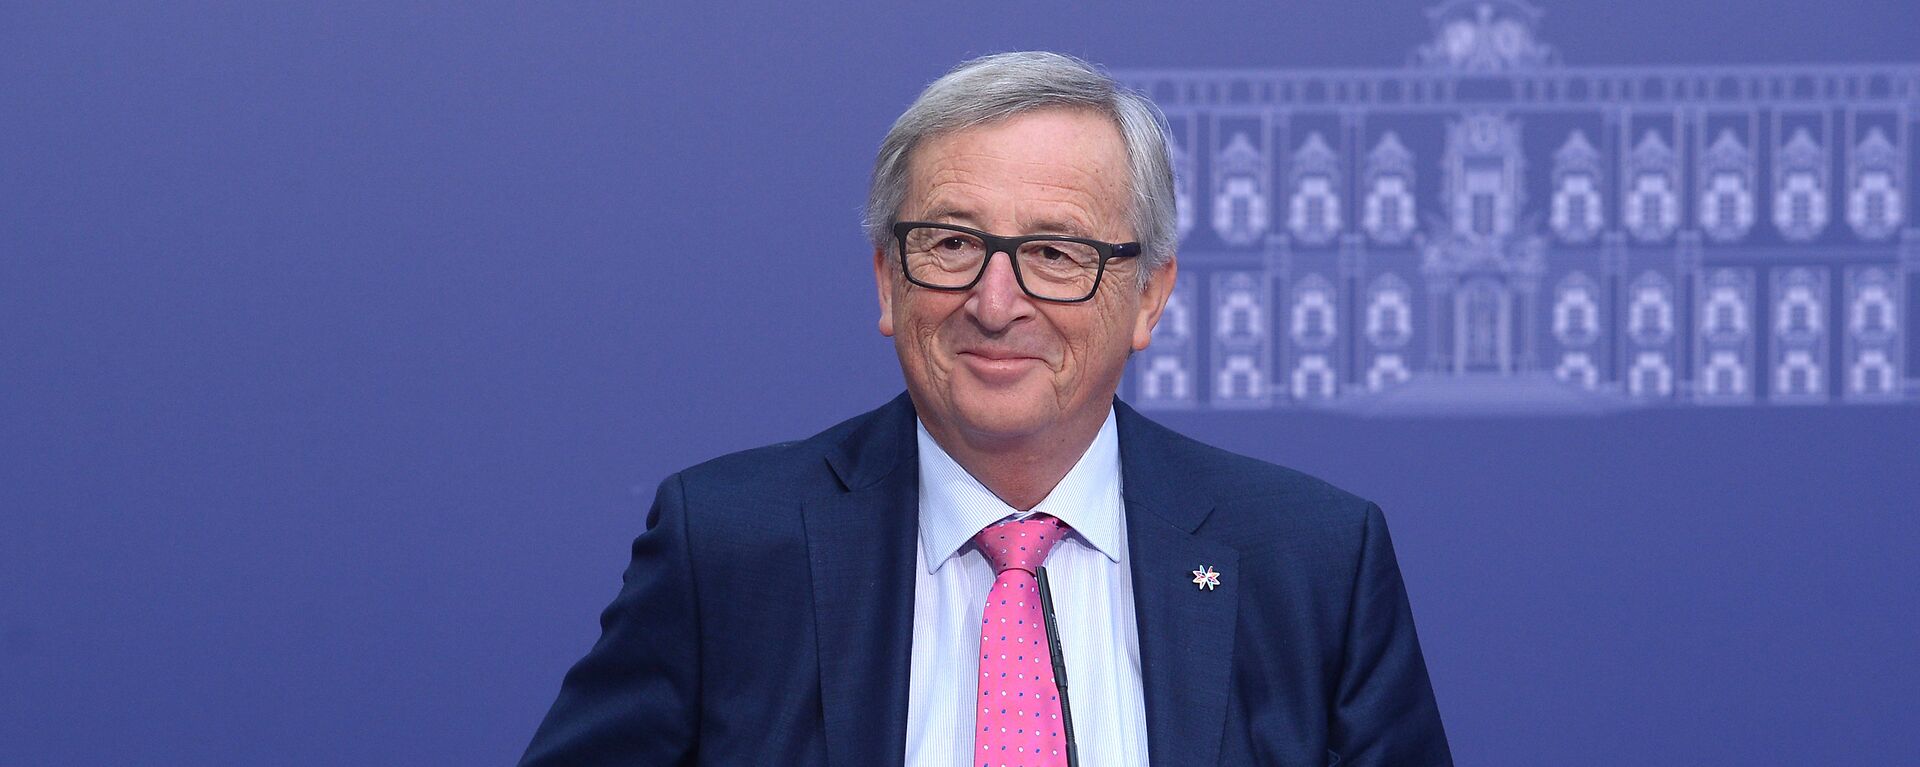 Chủ tịch Ủy ban châu Âu Jean-Claude Juncker - Sputnik Việt Nam, 1920, 20.06.2018